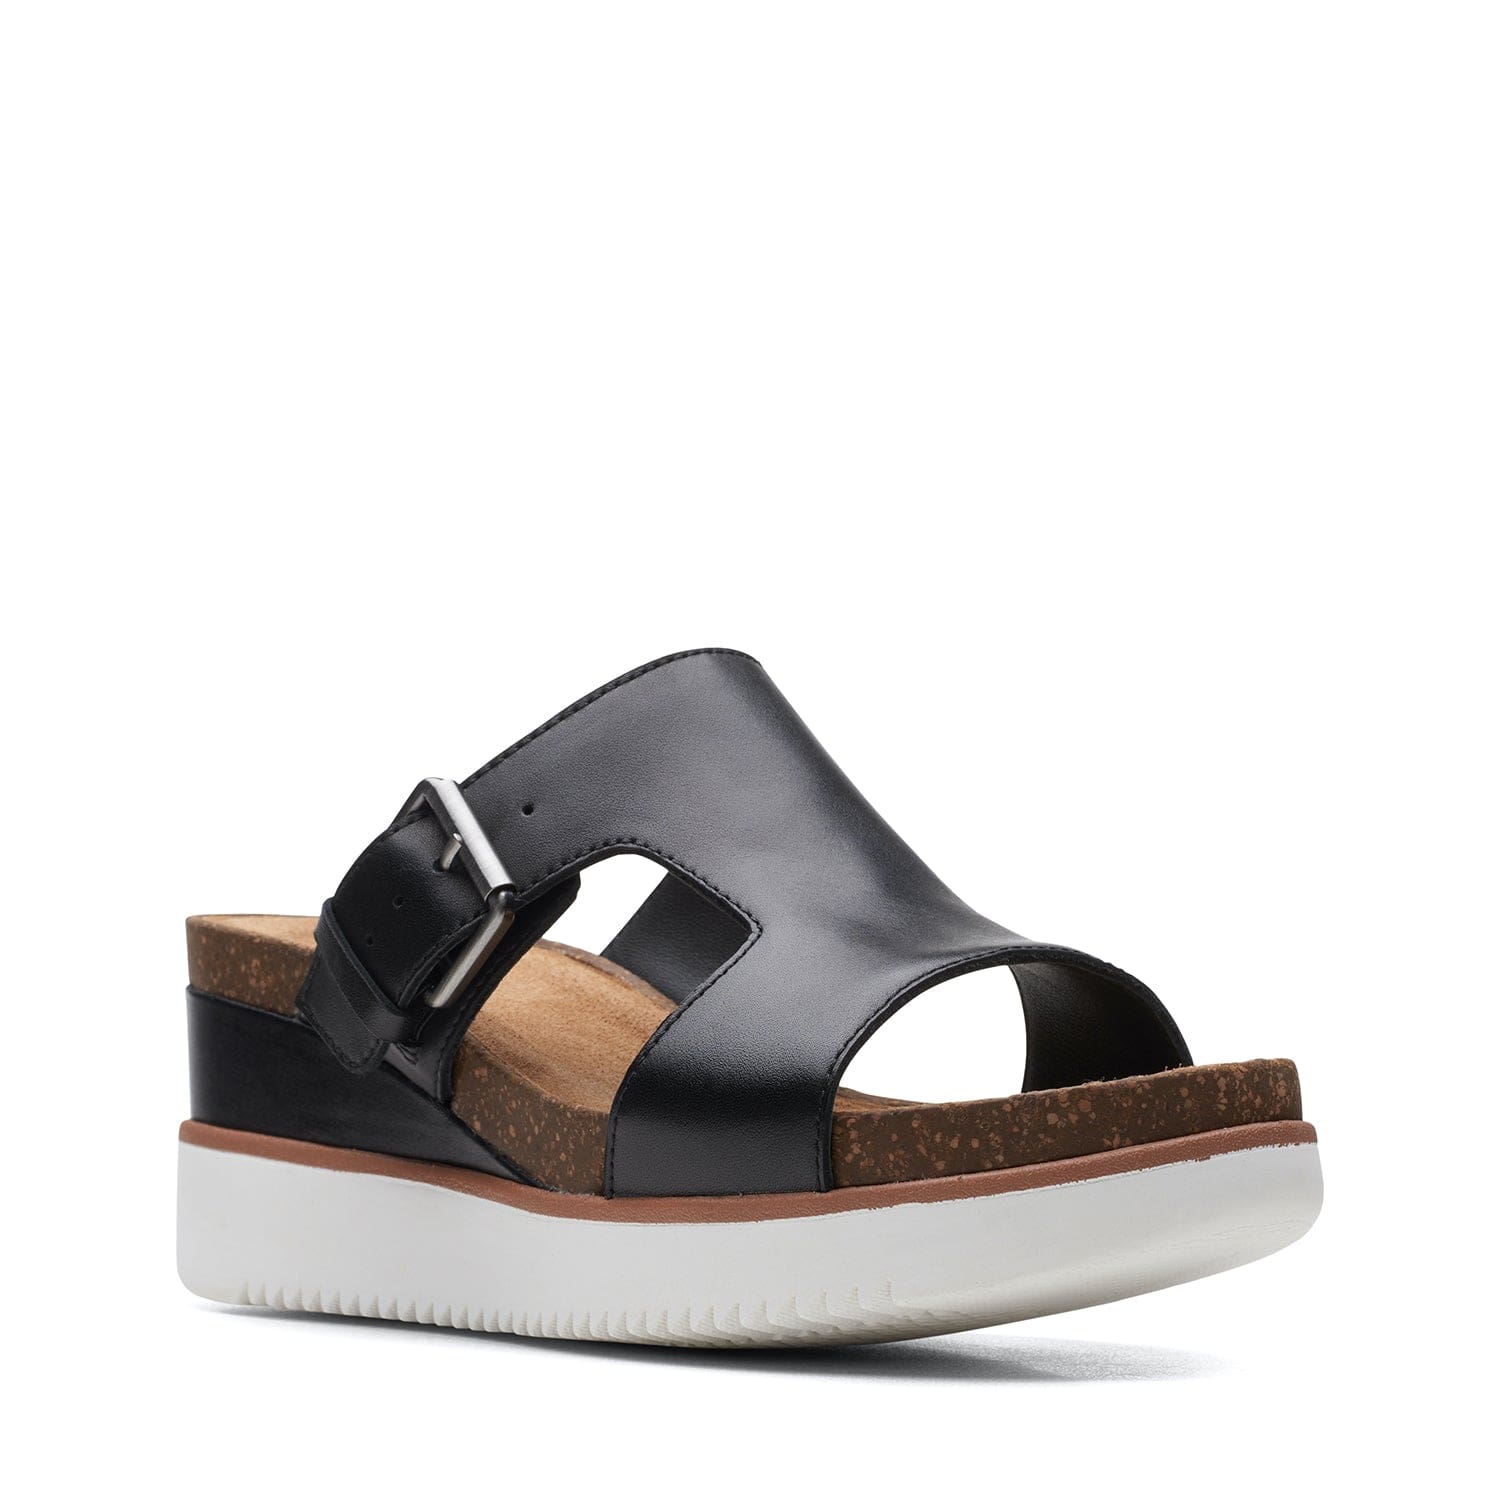 Clarks Lizby Ease - Sandals - Black Leather - 261590404 - D Width (Standard Fit)